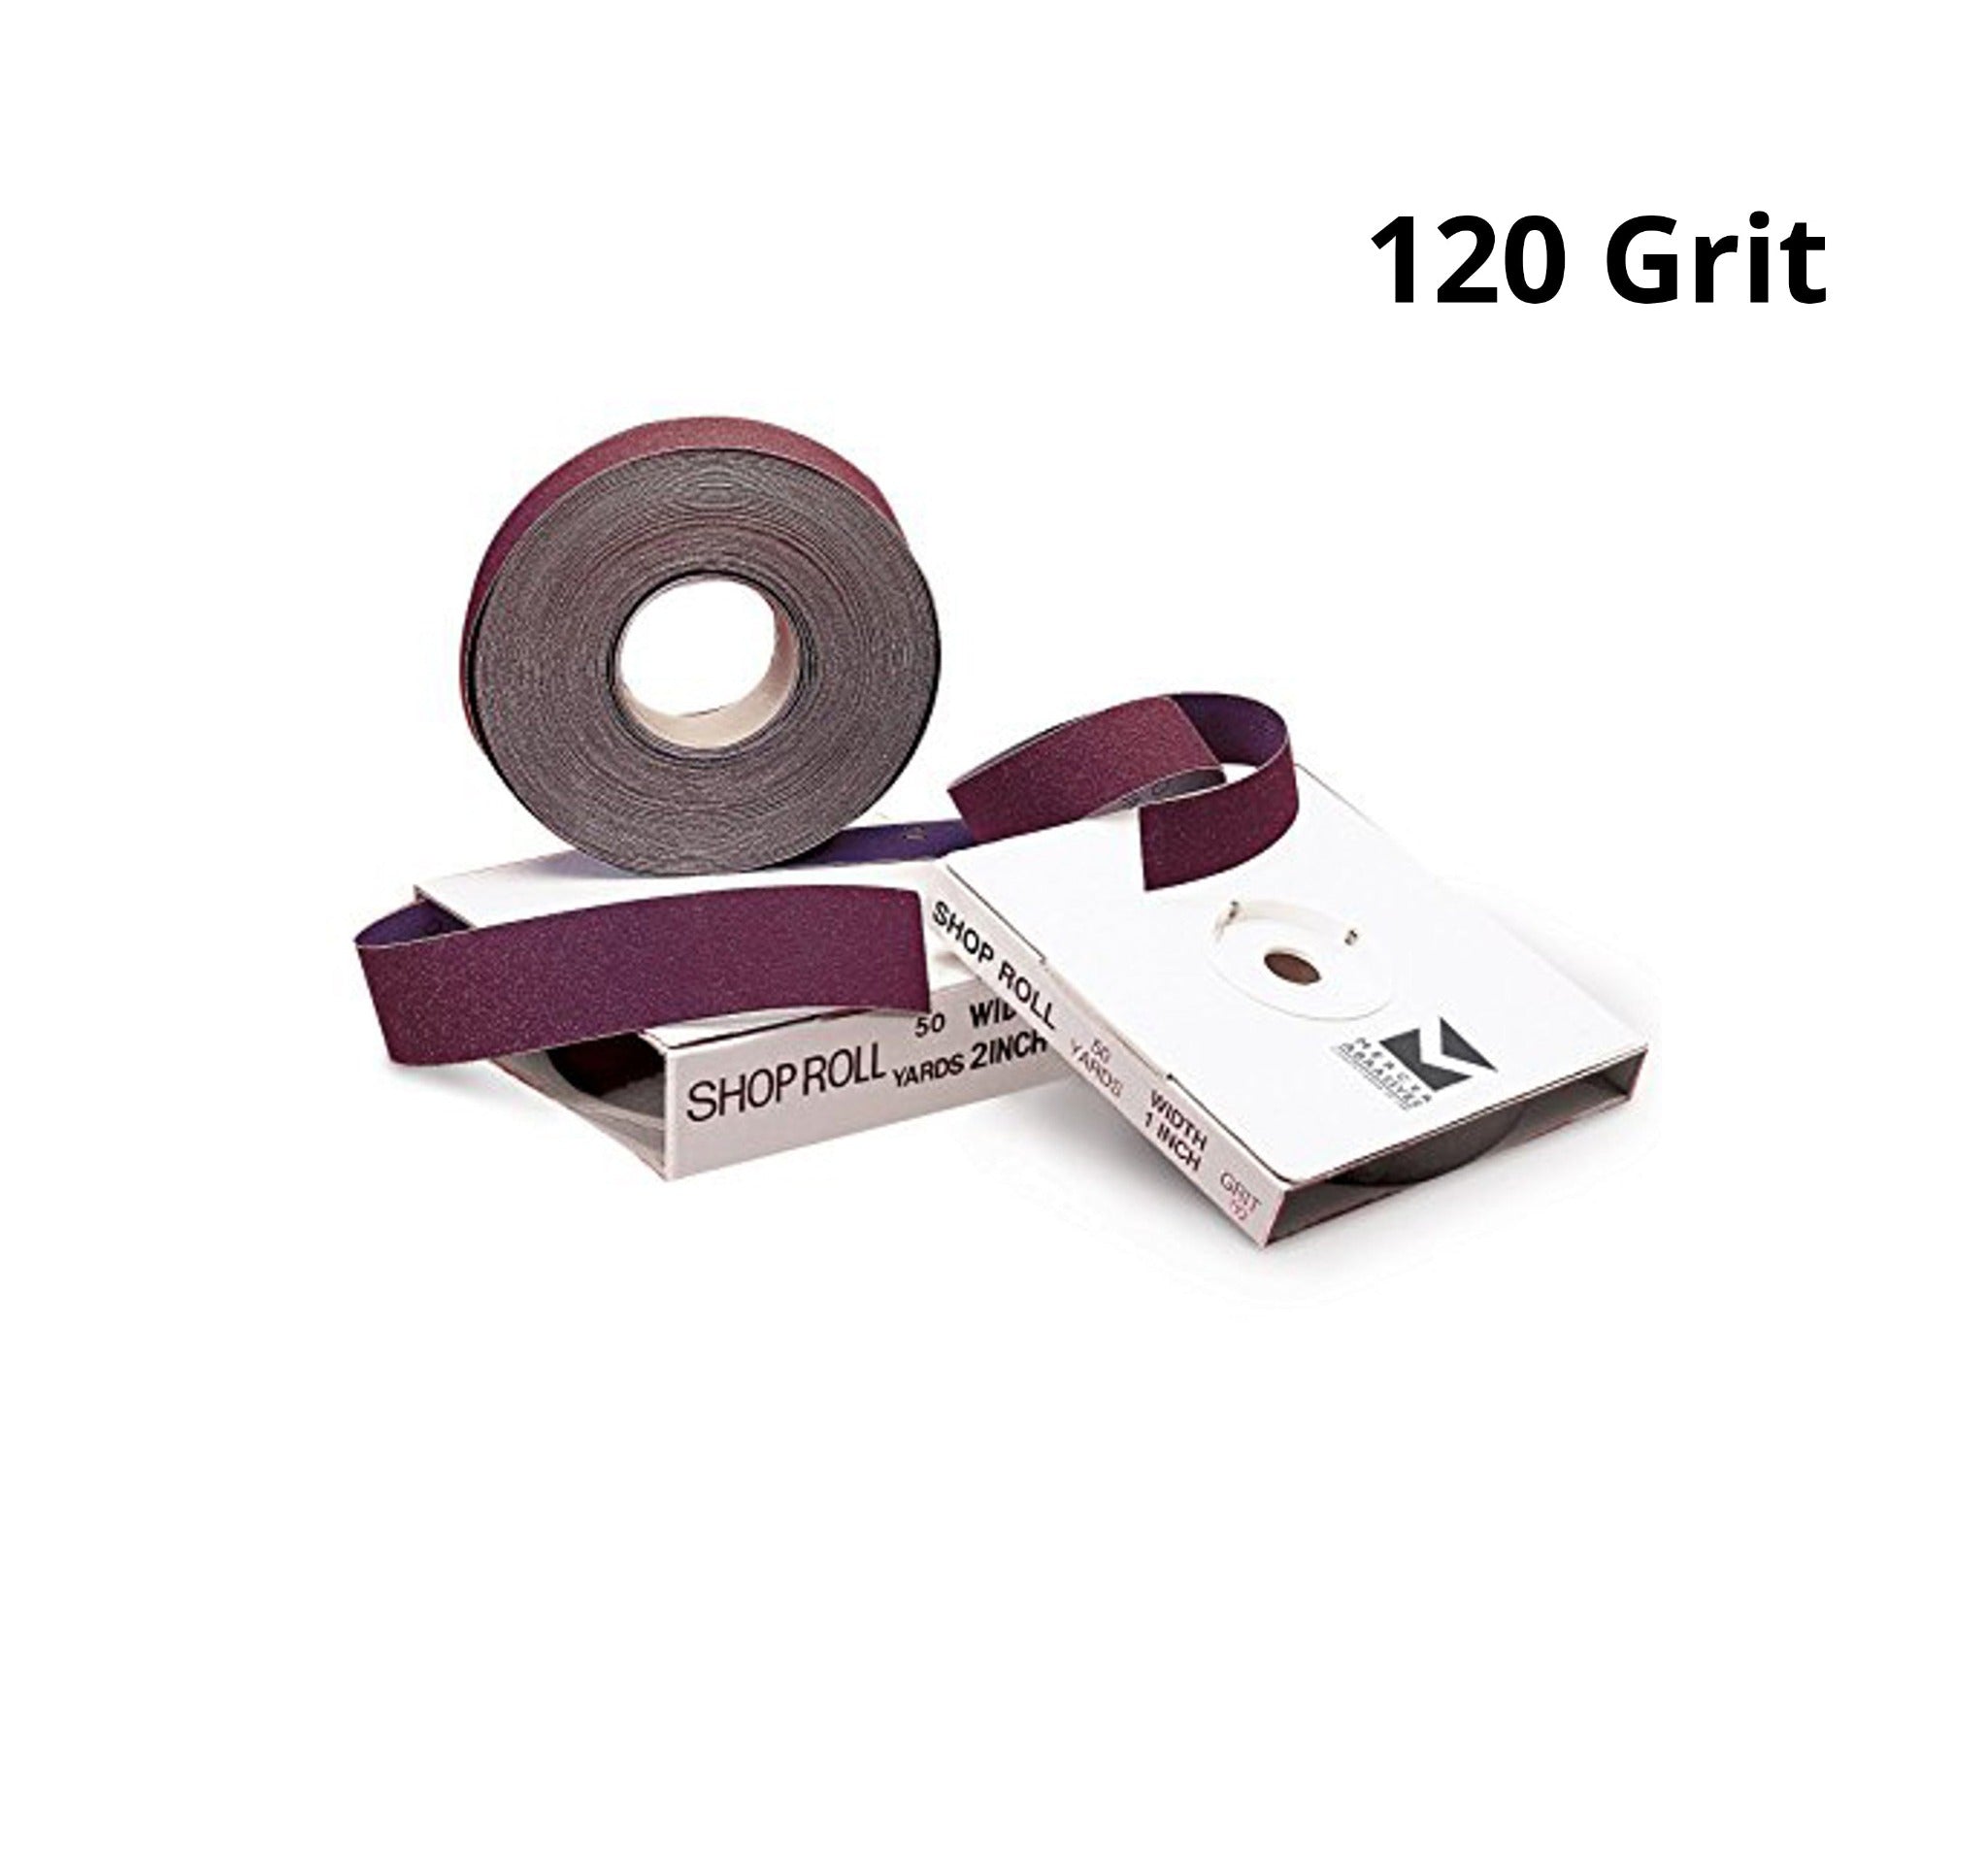 Aluminum Oxide Shop Roll 120 Grit 1” X 50 Yds